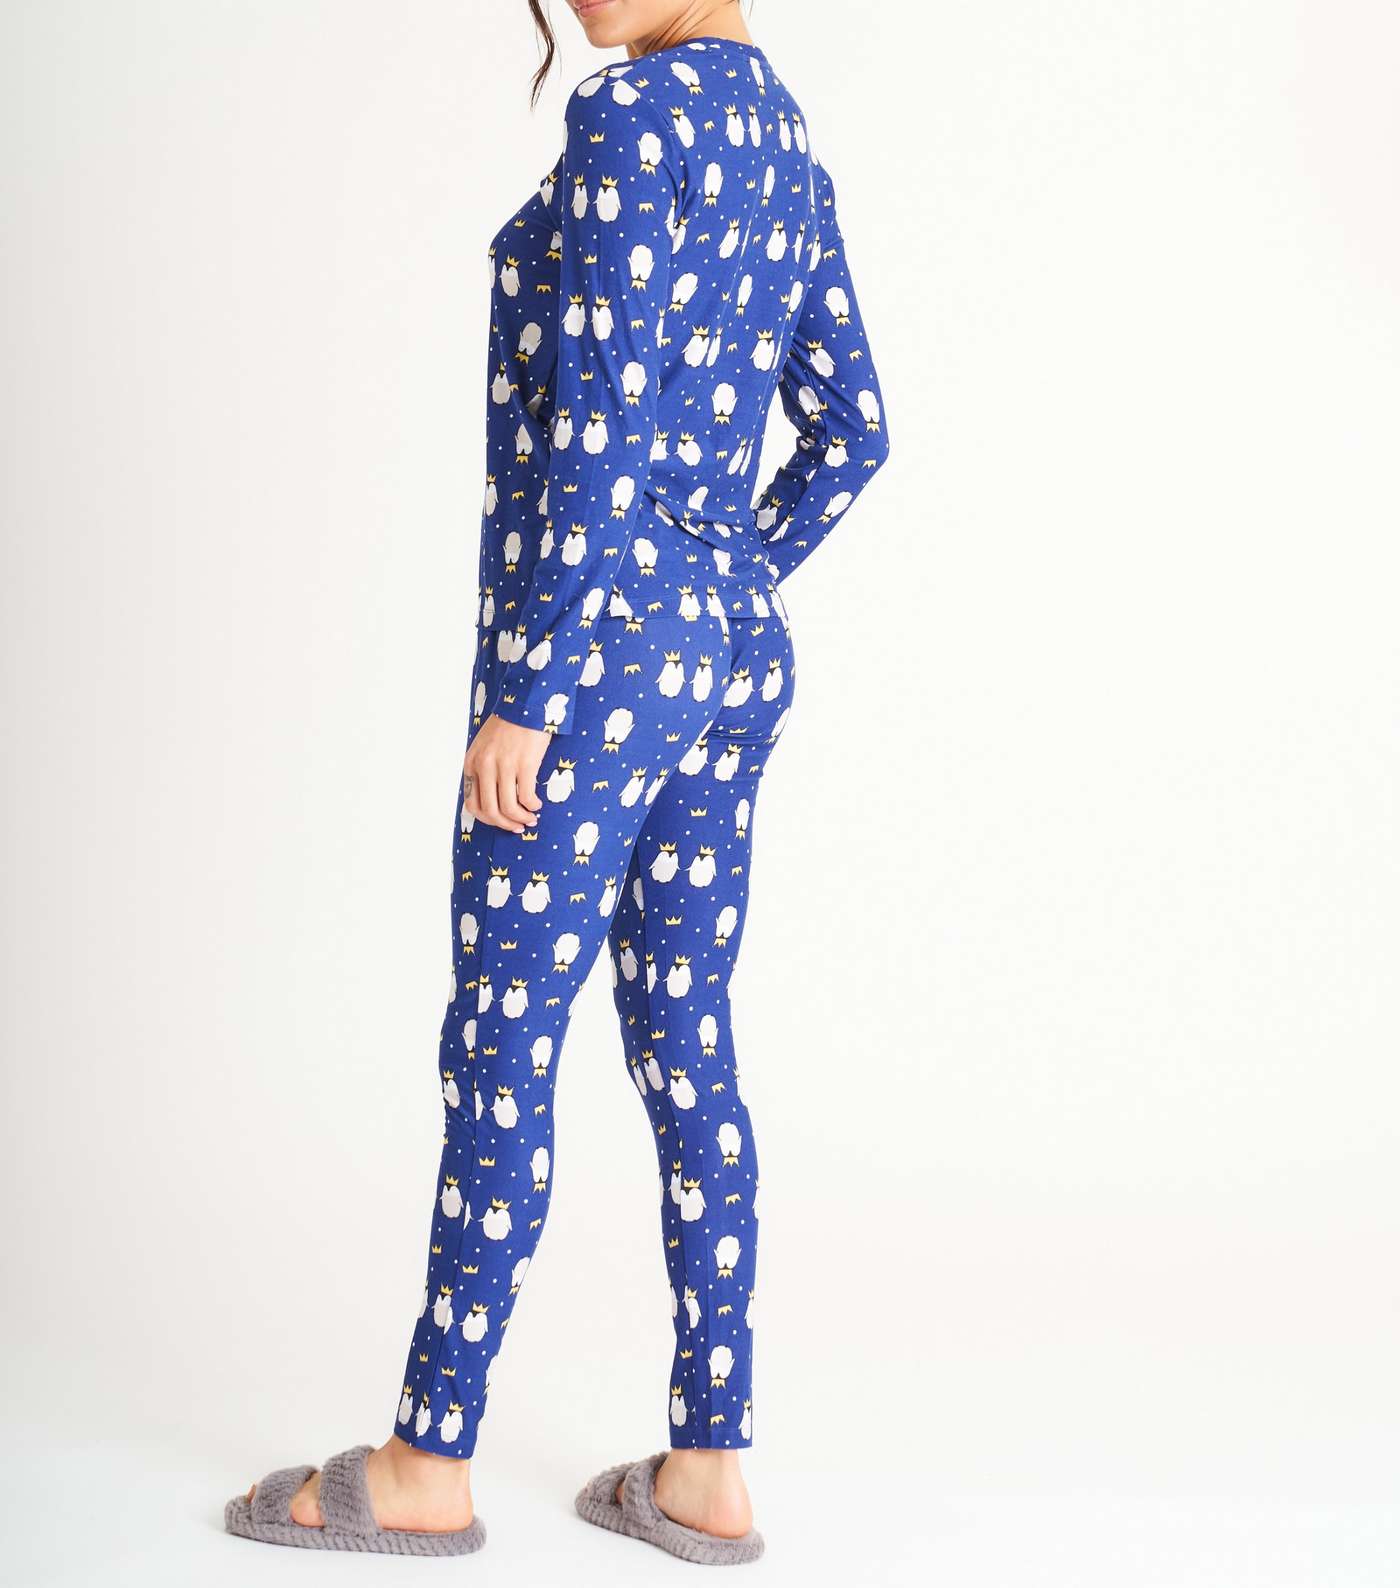 Loungeable Blue Legging Pyjama Set with Penguin Print Image 3